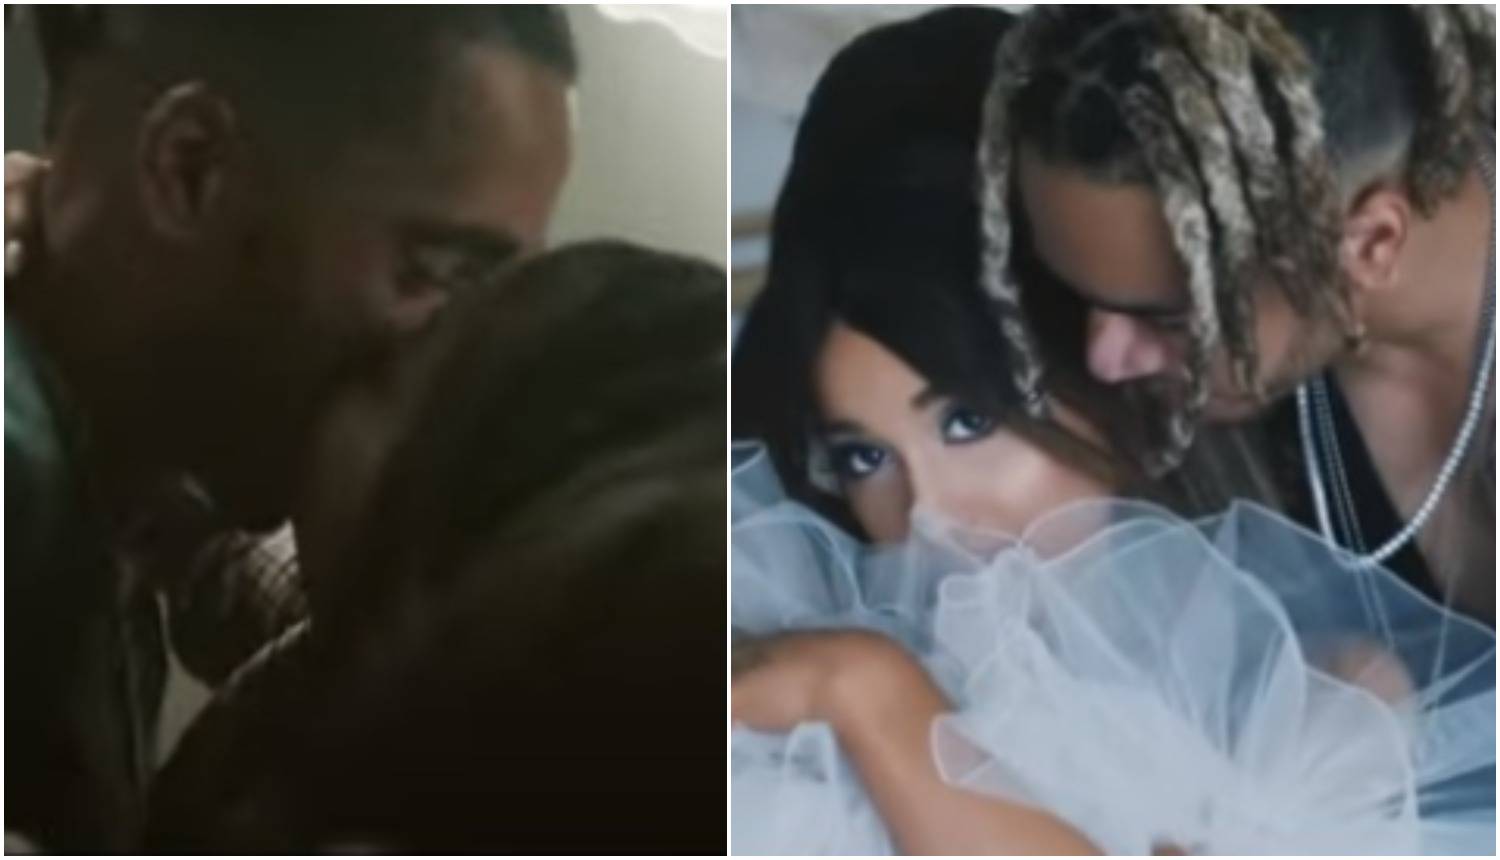 Ariana pobudila sumnju novim spotom: 'Jel ti to novi dečko?'